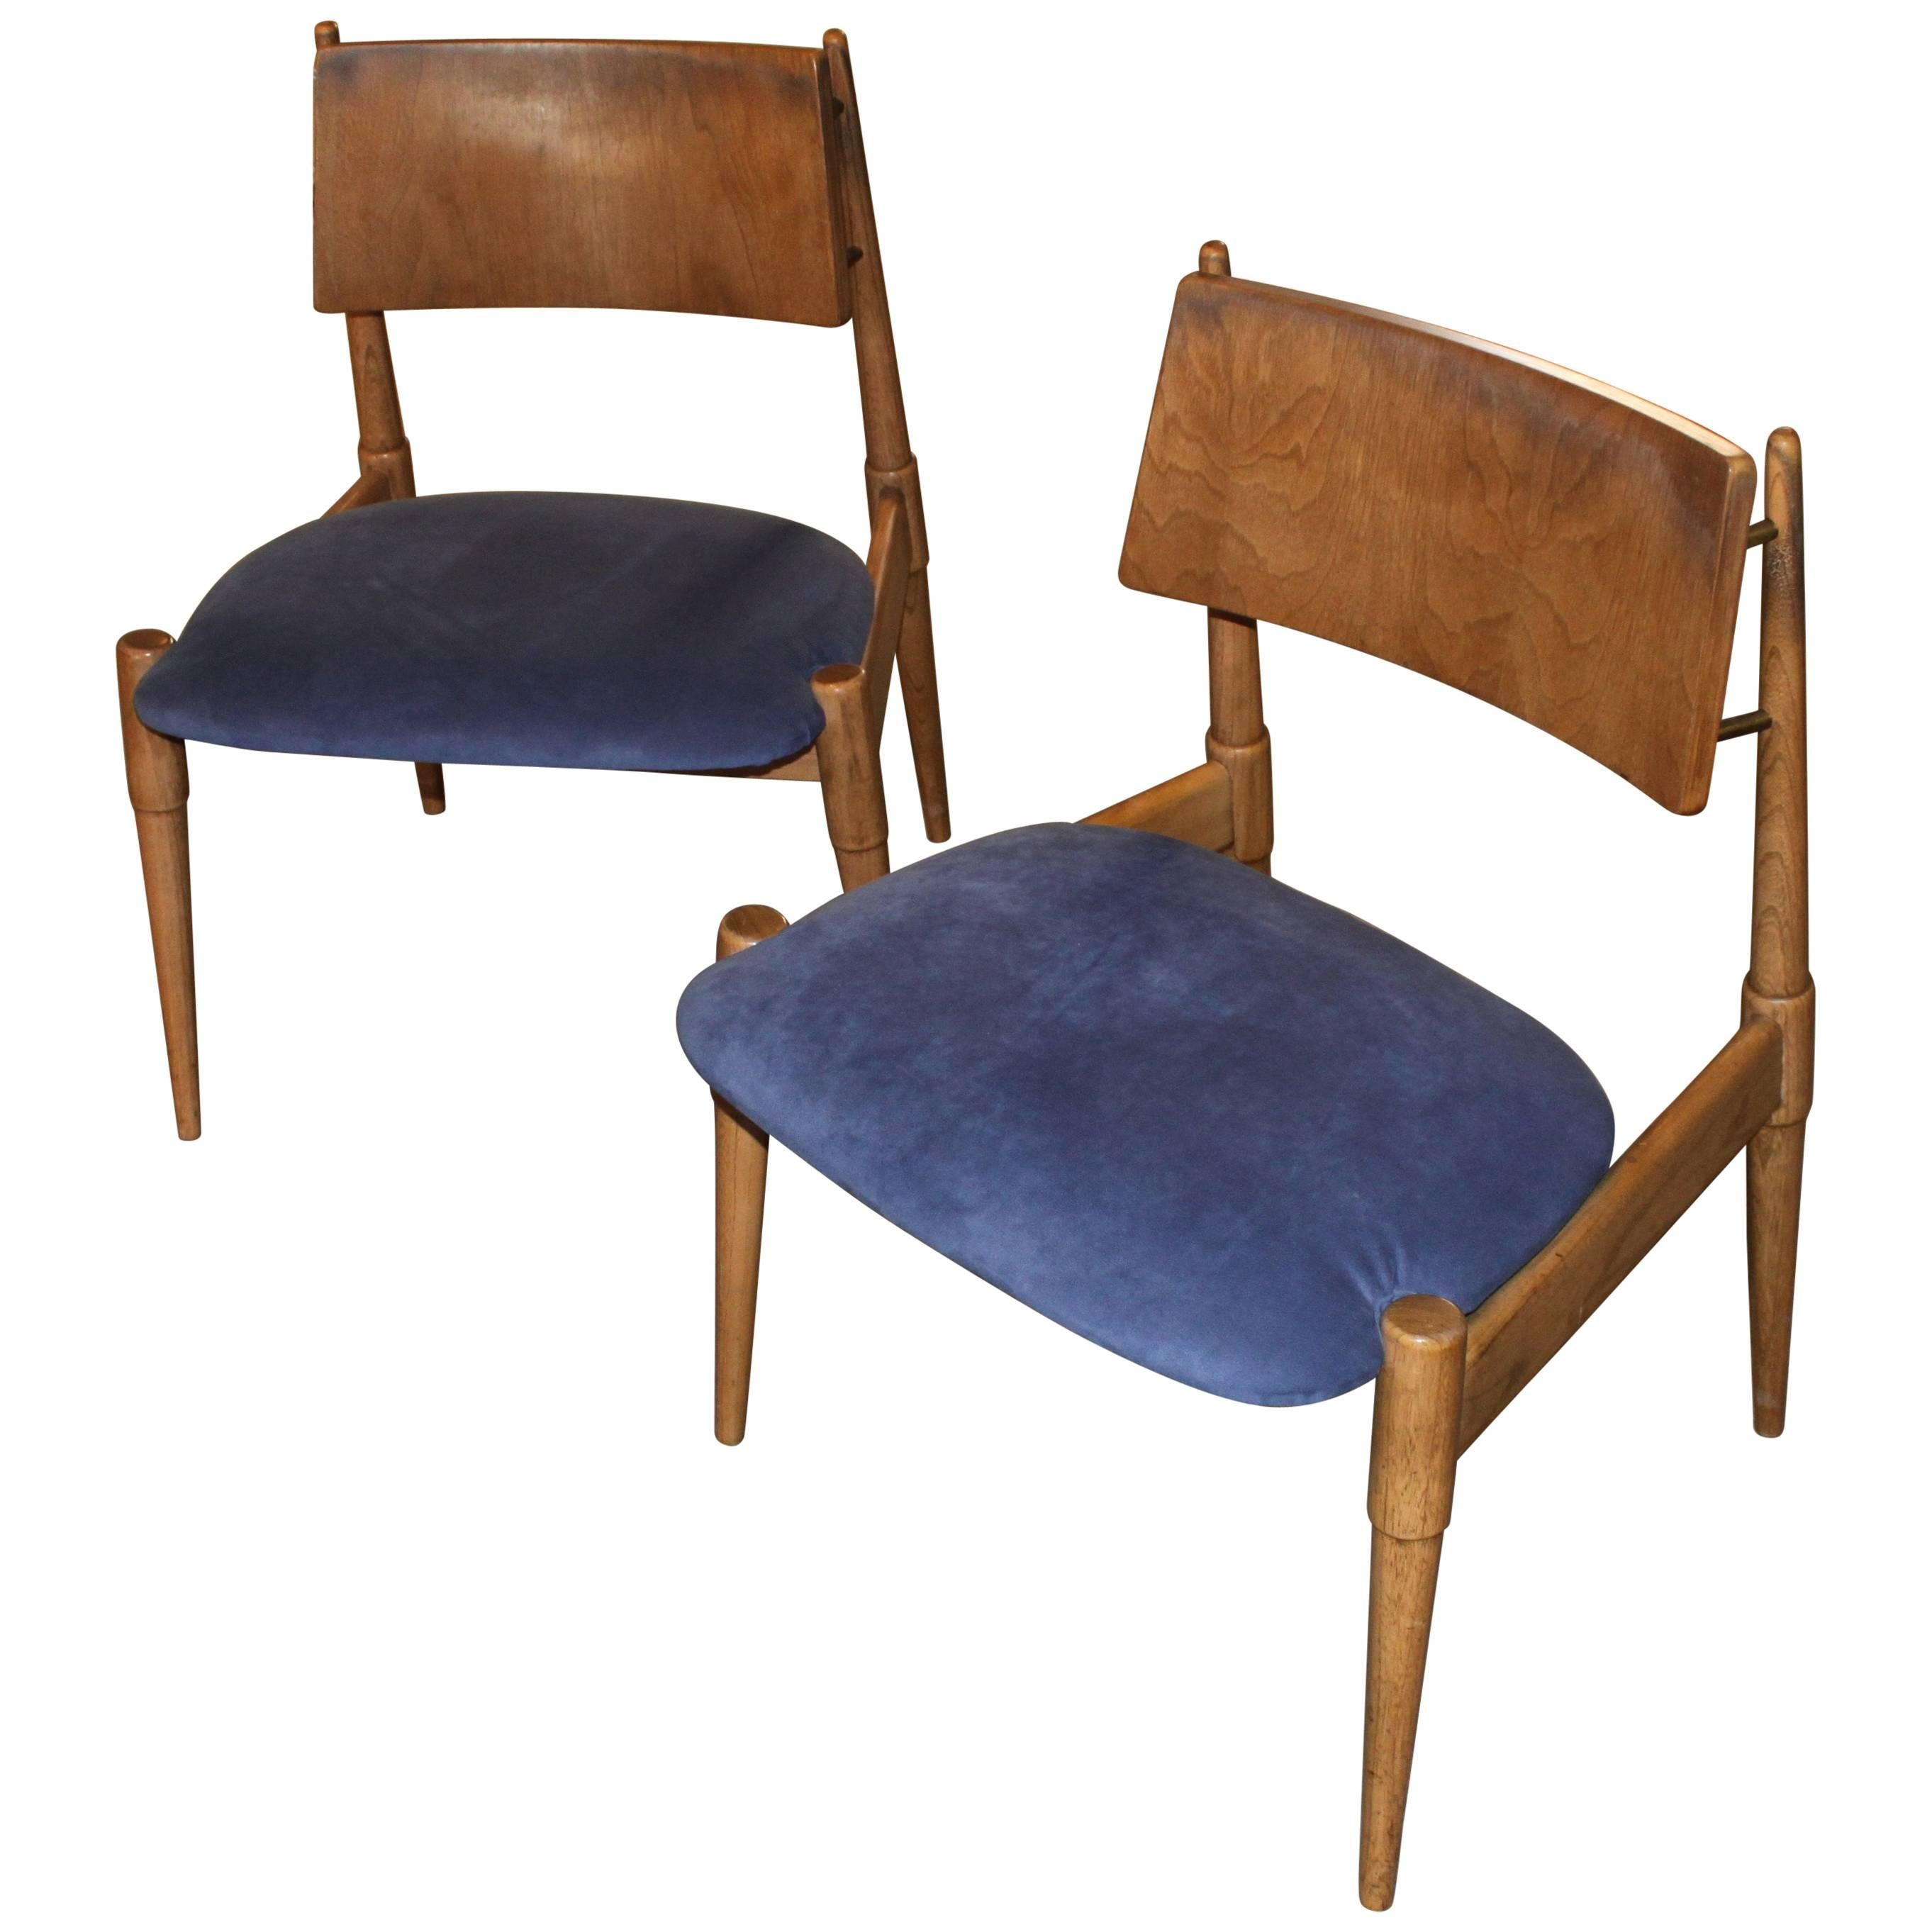 Unusual Mid-Century Modern Chairs